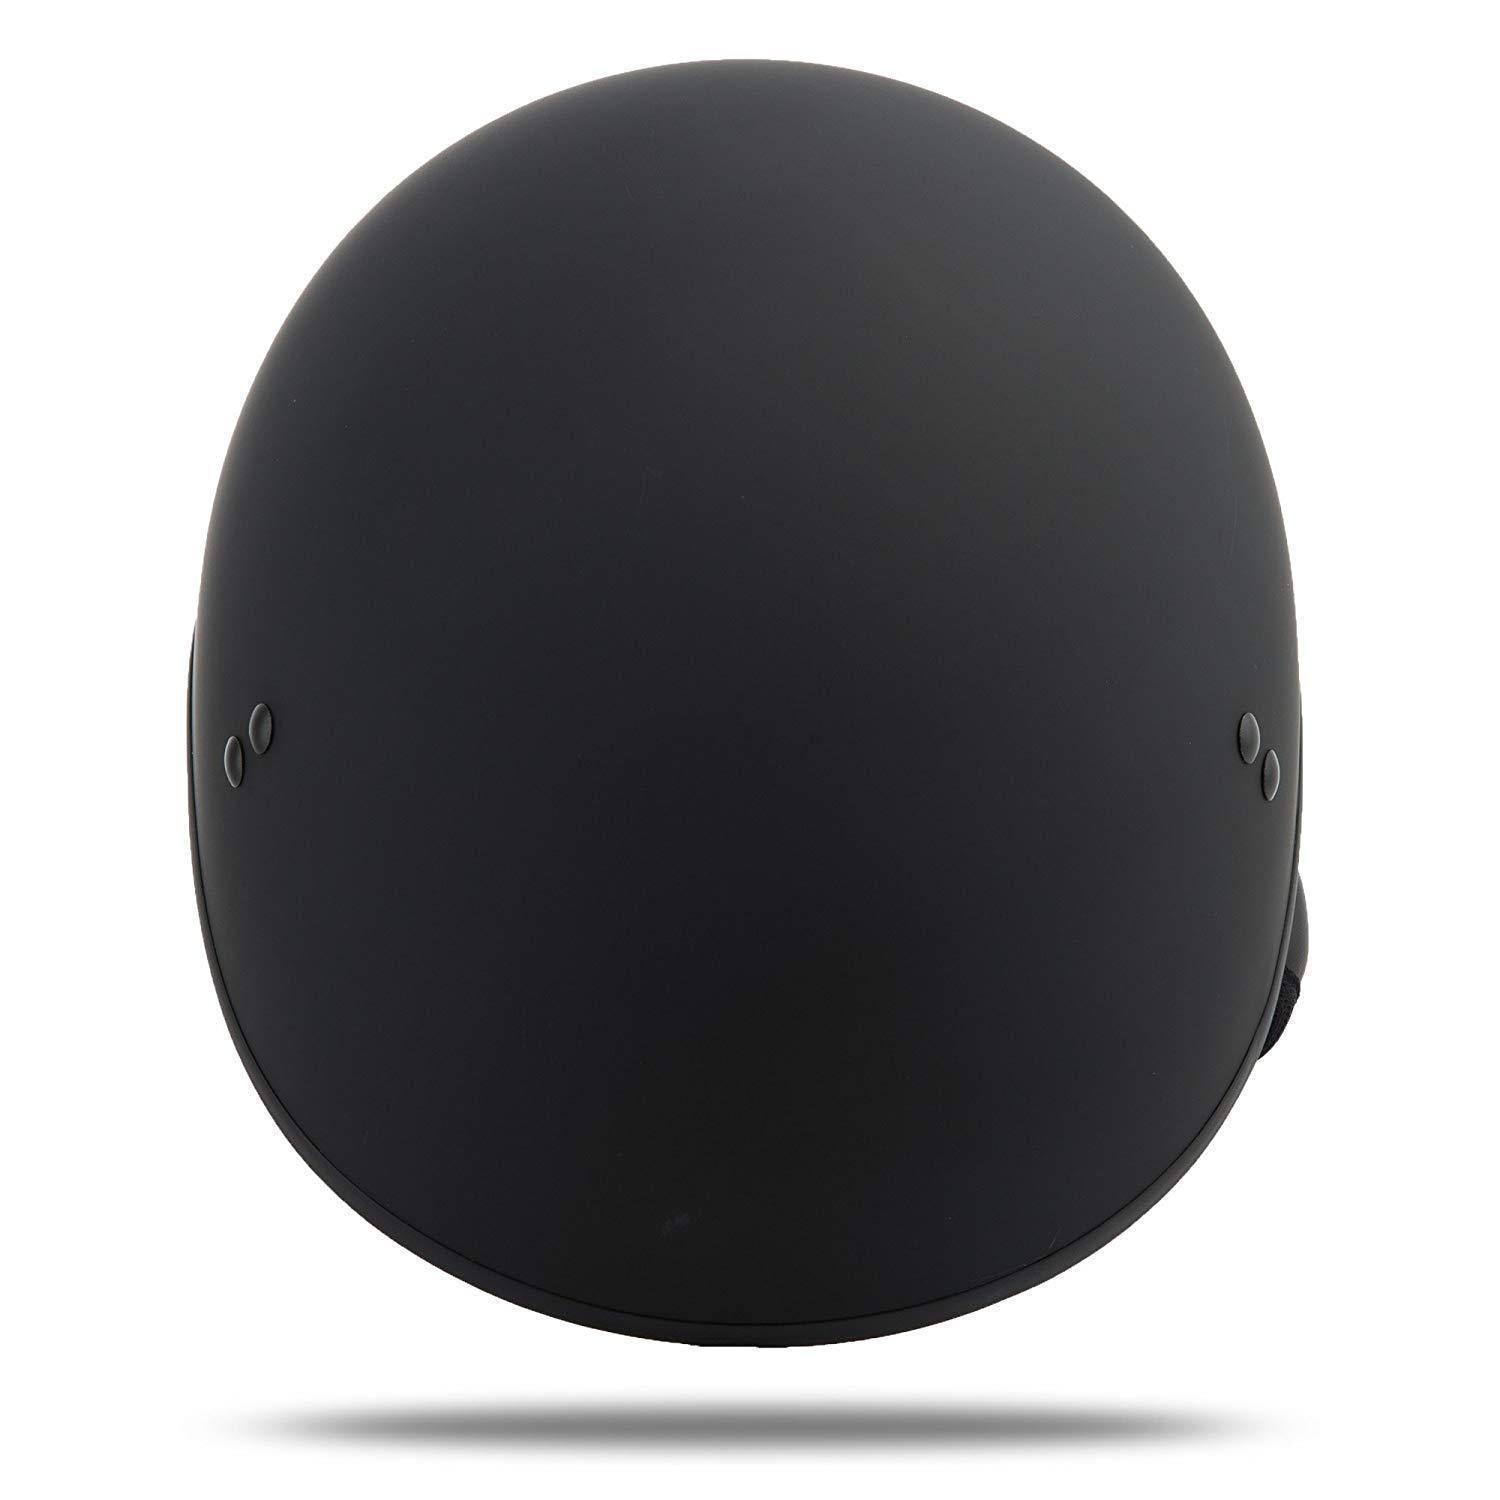 GMax GM45 Naked Matte Black Half Helmet